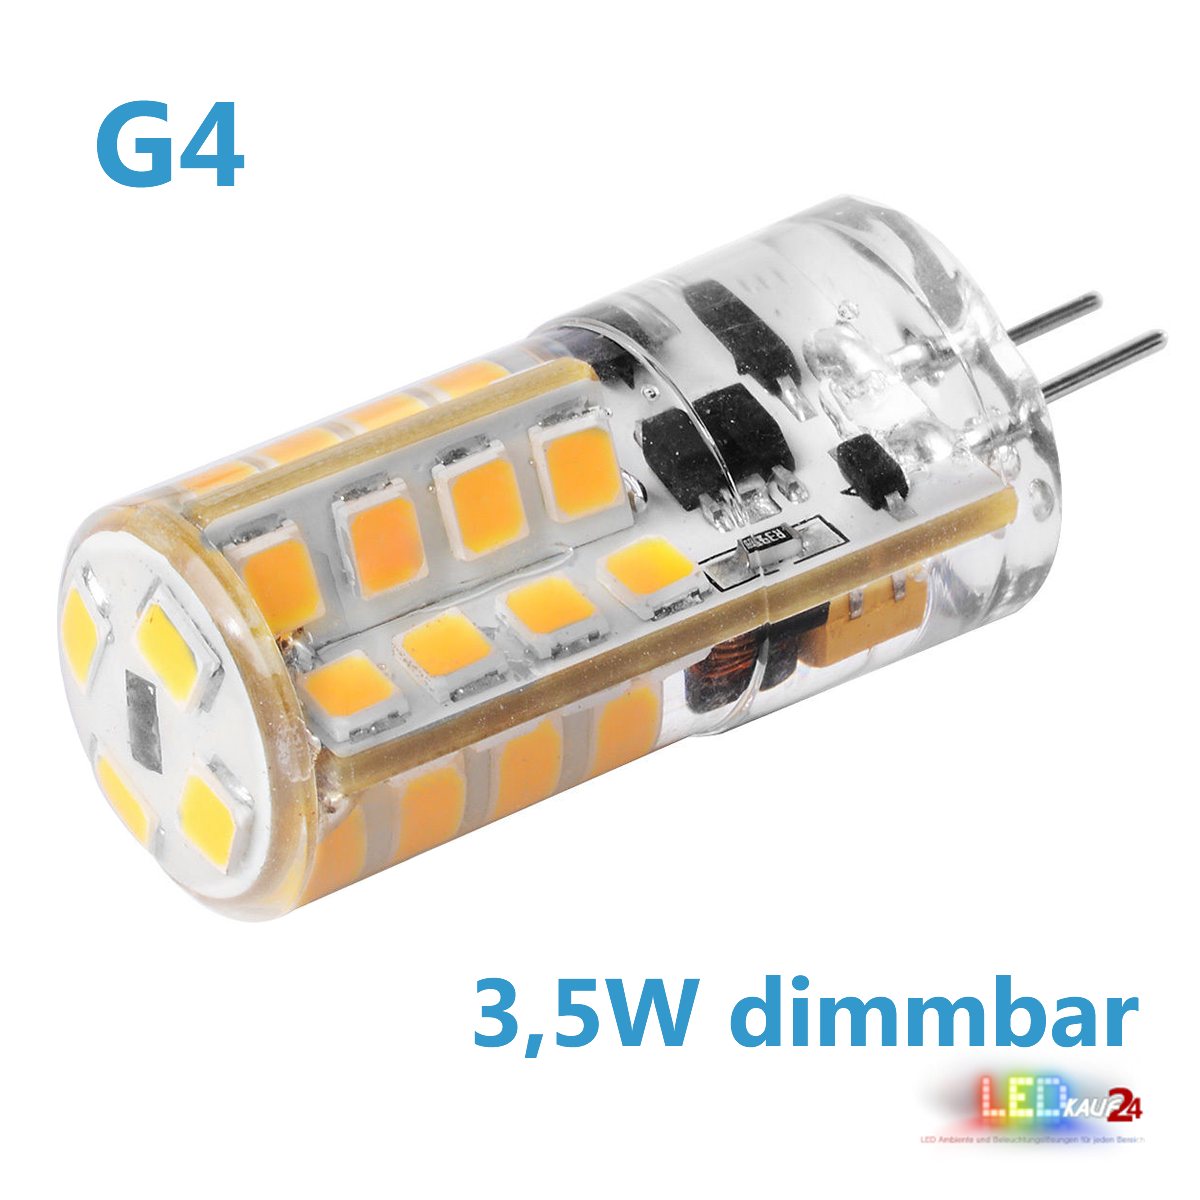 LED dimmbar 12V AC/DC Leuchtmittel warmweiß (Spot, Strahler, Halogen) | LEDkauf24.de LED Ambiente Beleuchtungslösungen